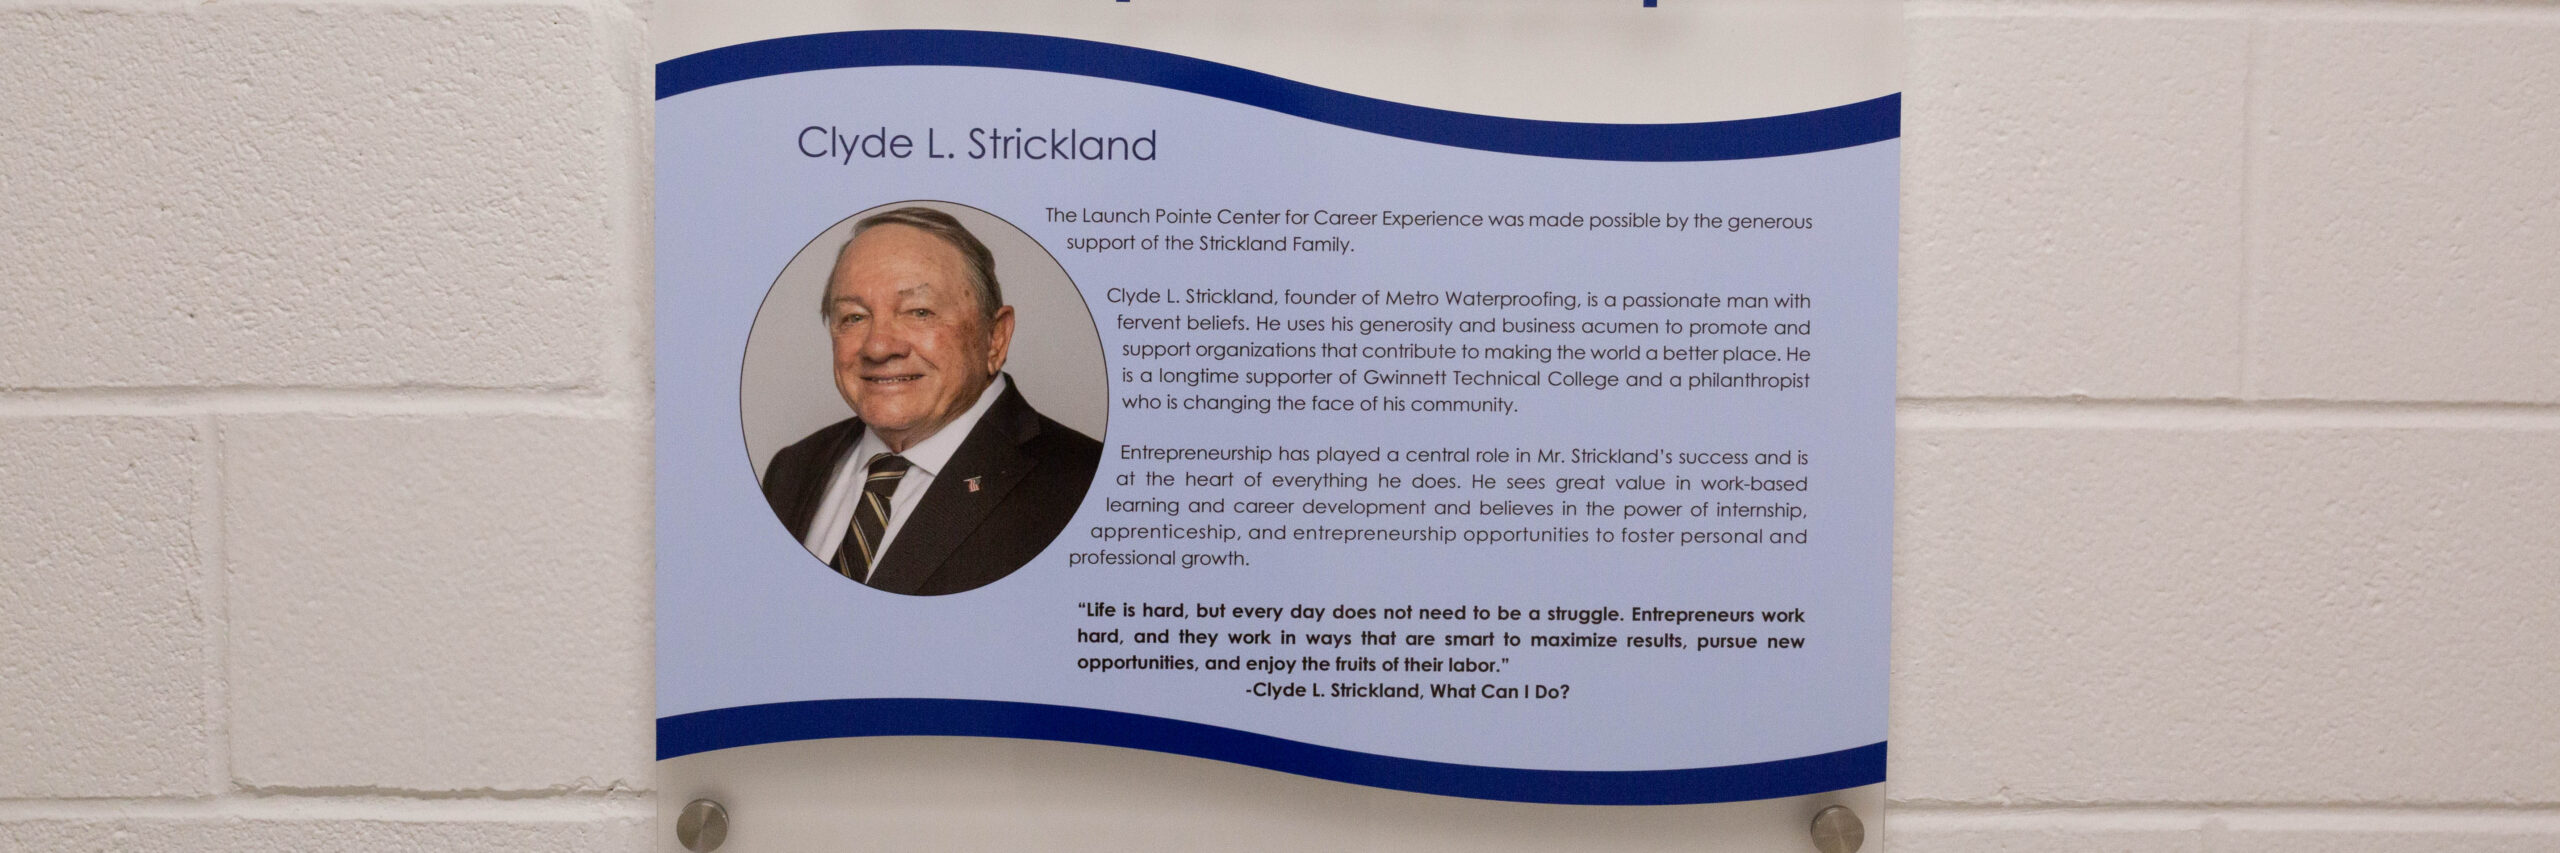 Clyde Strickland